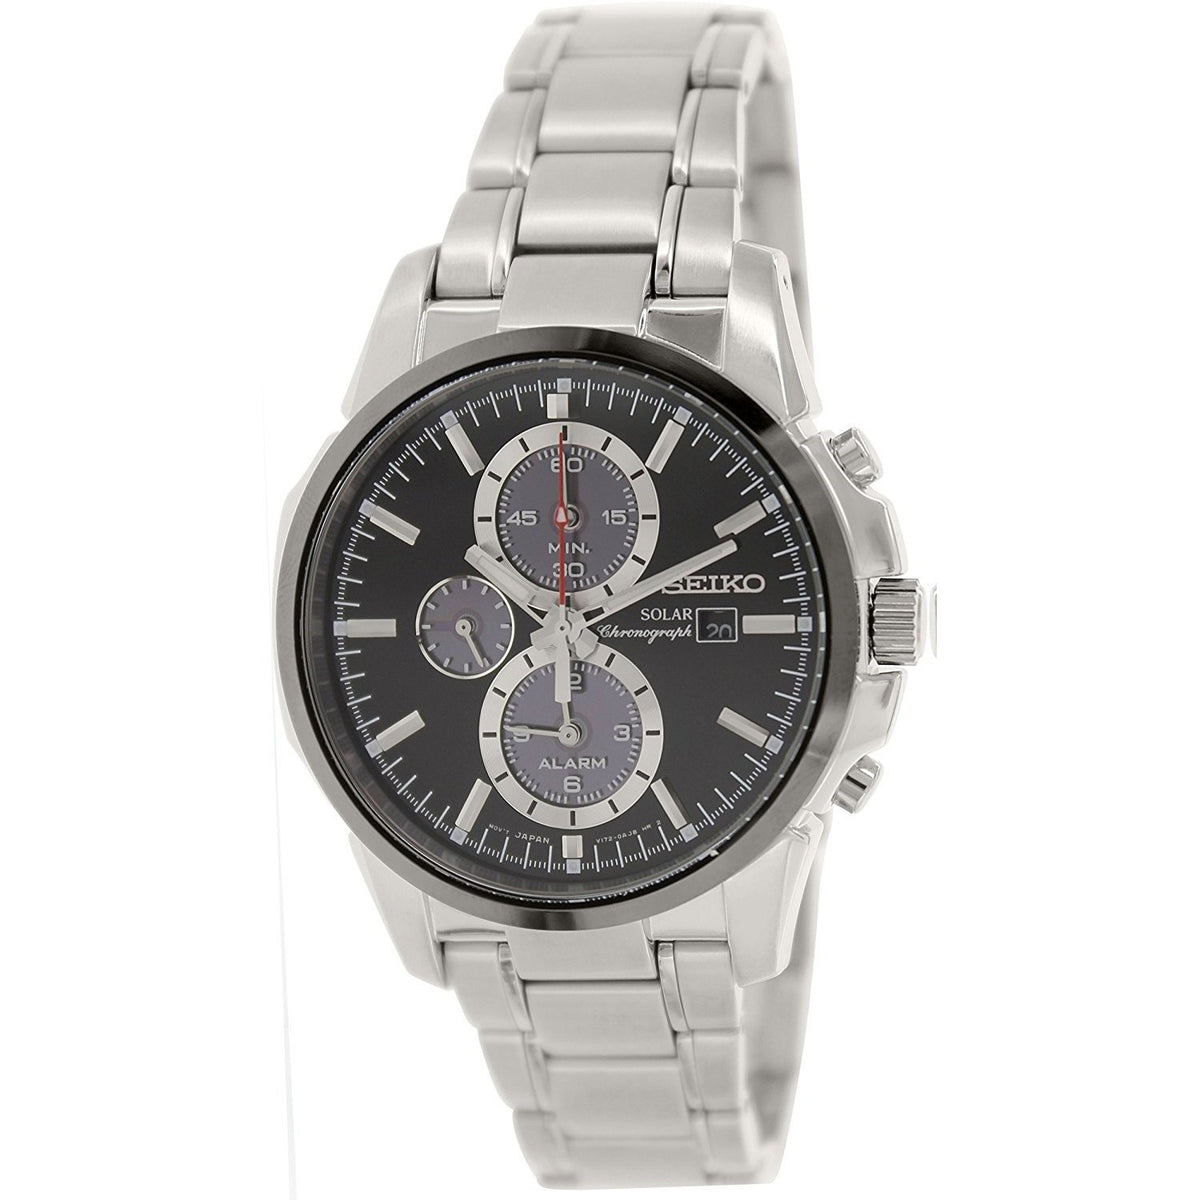 Seiko Men's SSC087 Solar Chronograph Stainless Steel Watch - Bezali